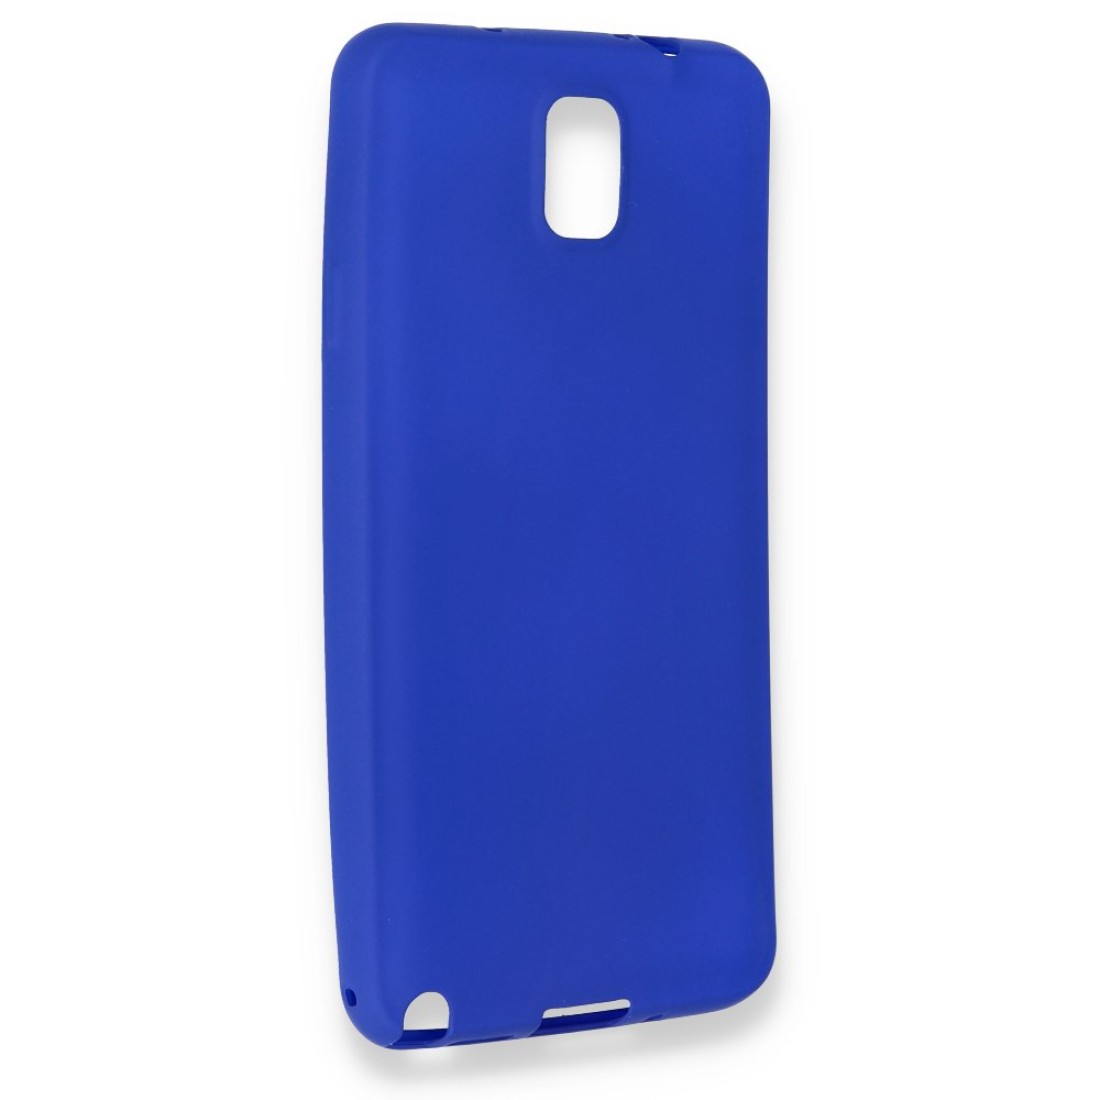 Samsung Galaxy Note 3 / N9000 Kılıf Premium Rubber Silikon - Mavi